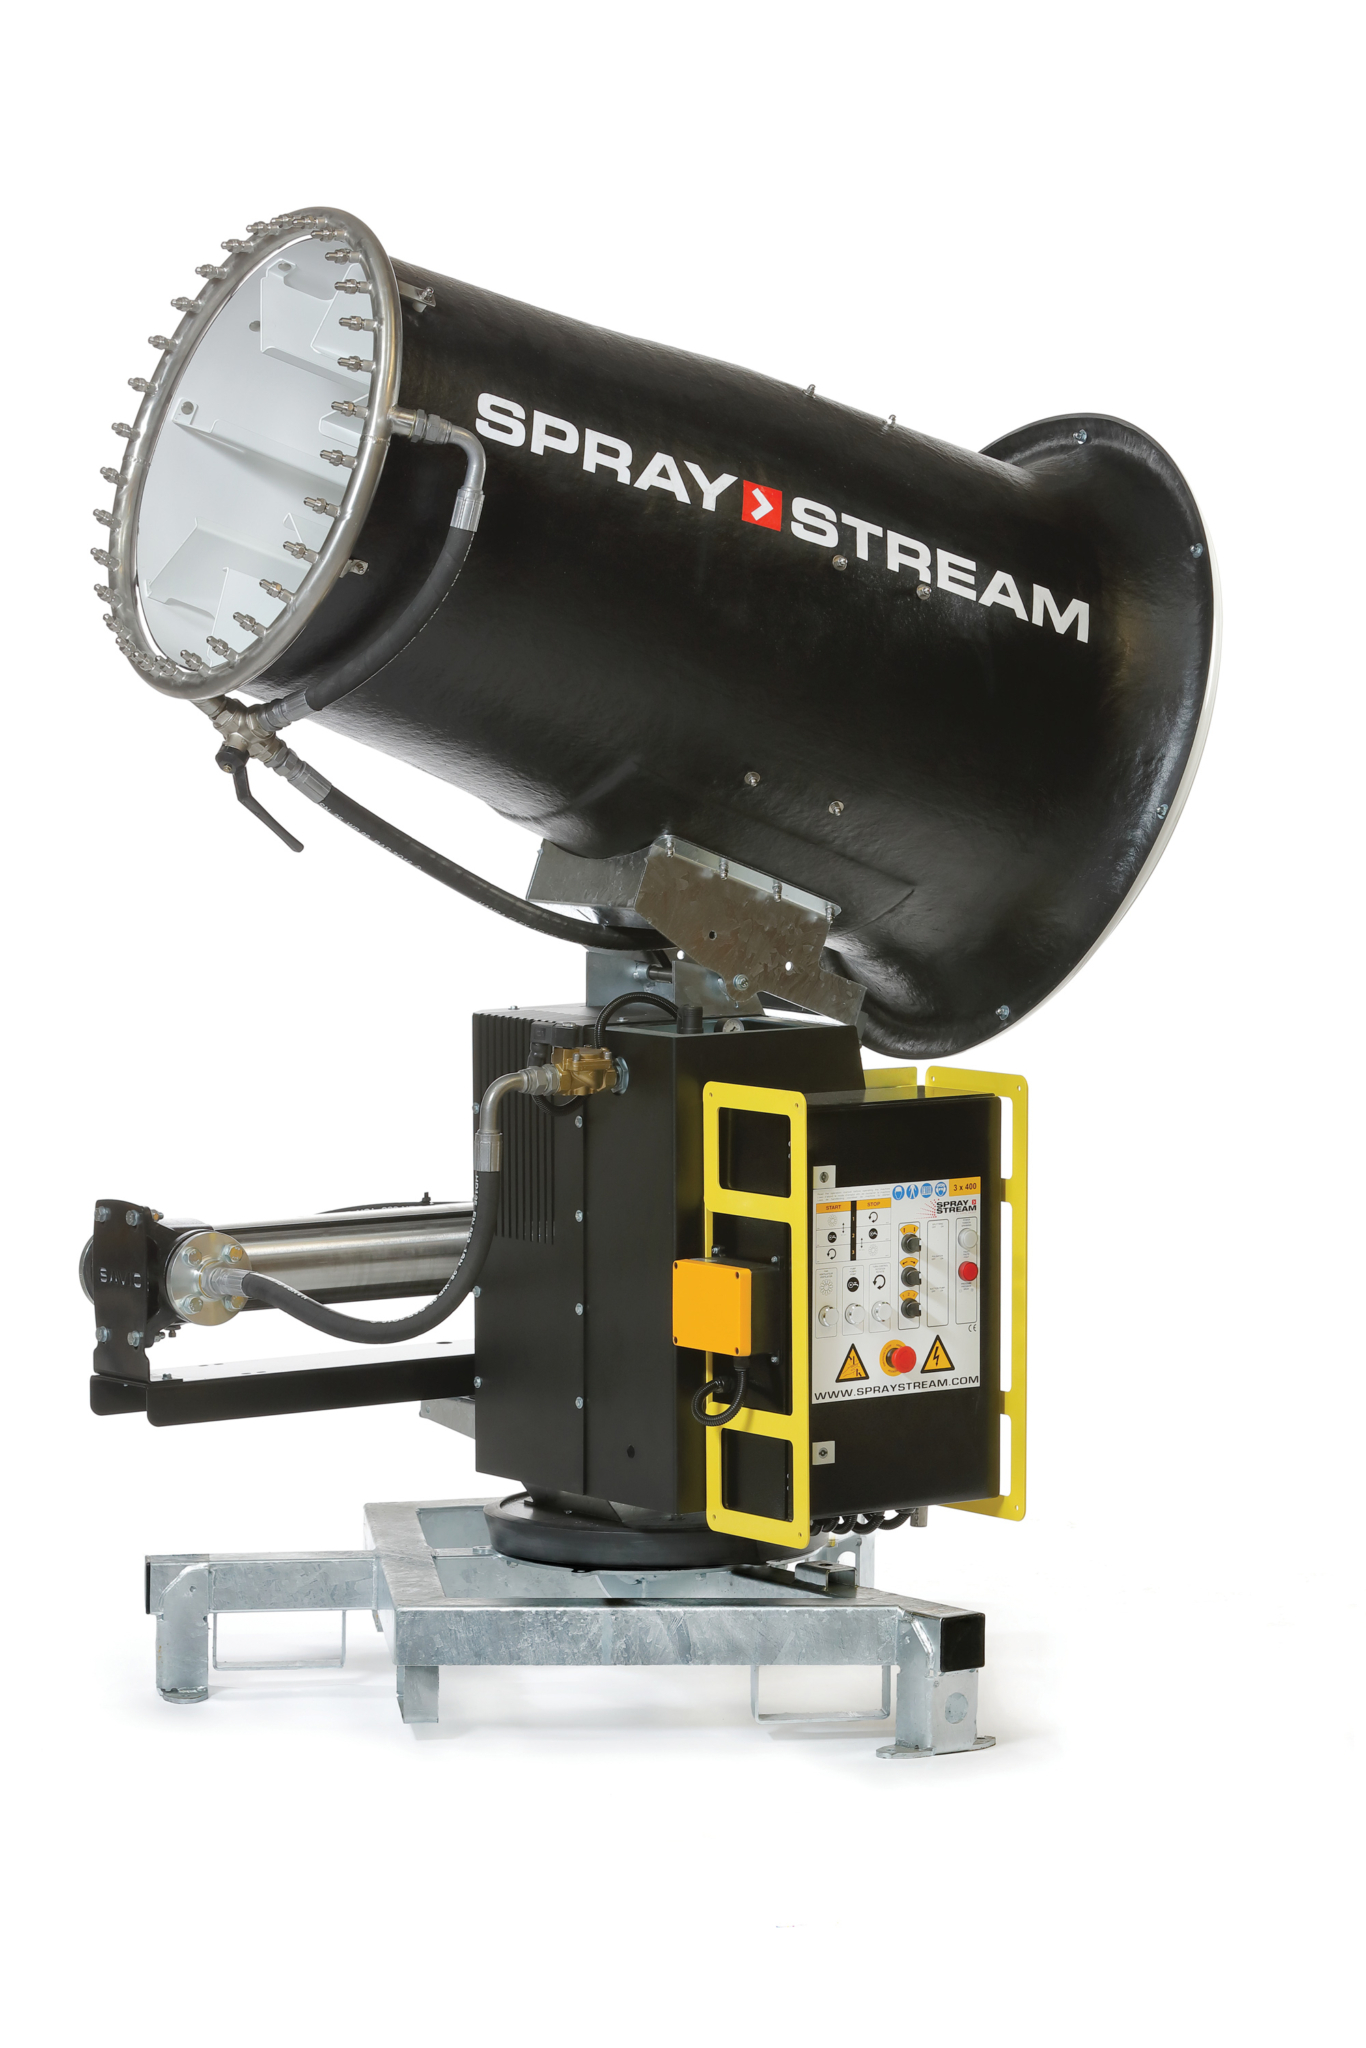 Spraystream S11 0 SS60i 002